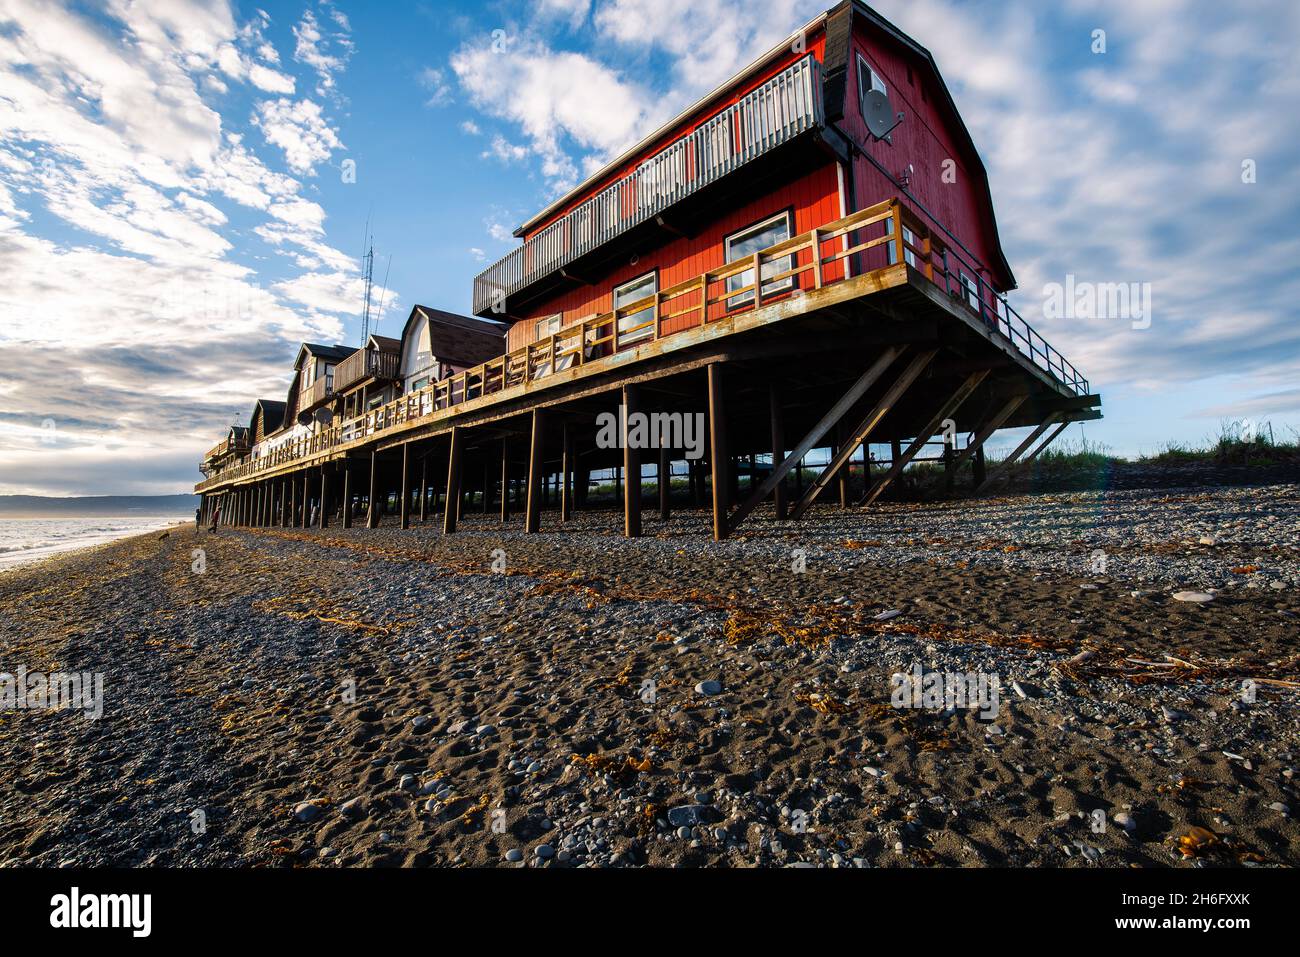 Landscape of Homer Spit beach - Alaska - USA Stock Photo